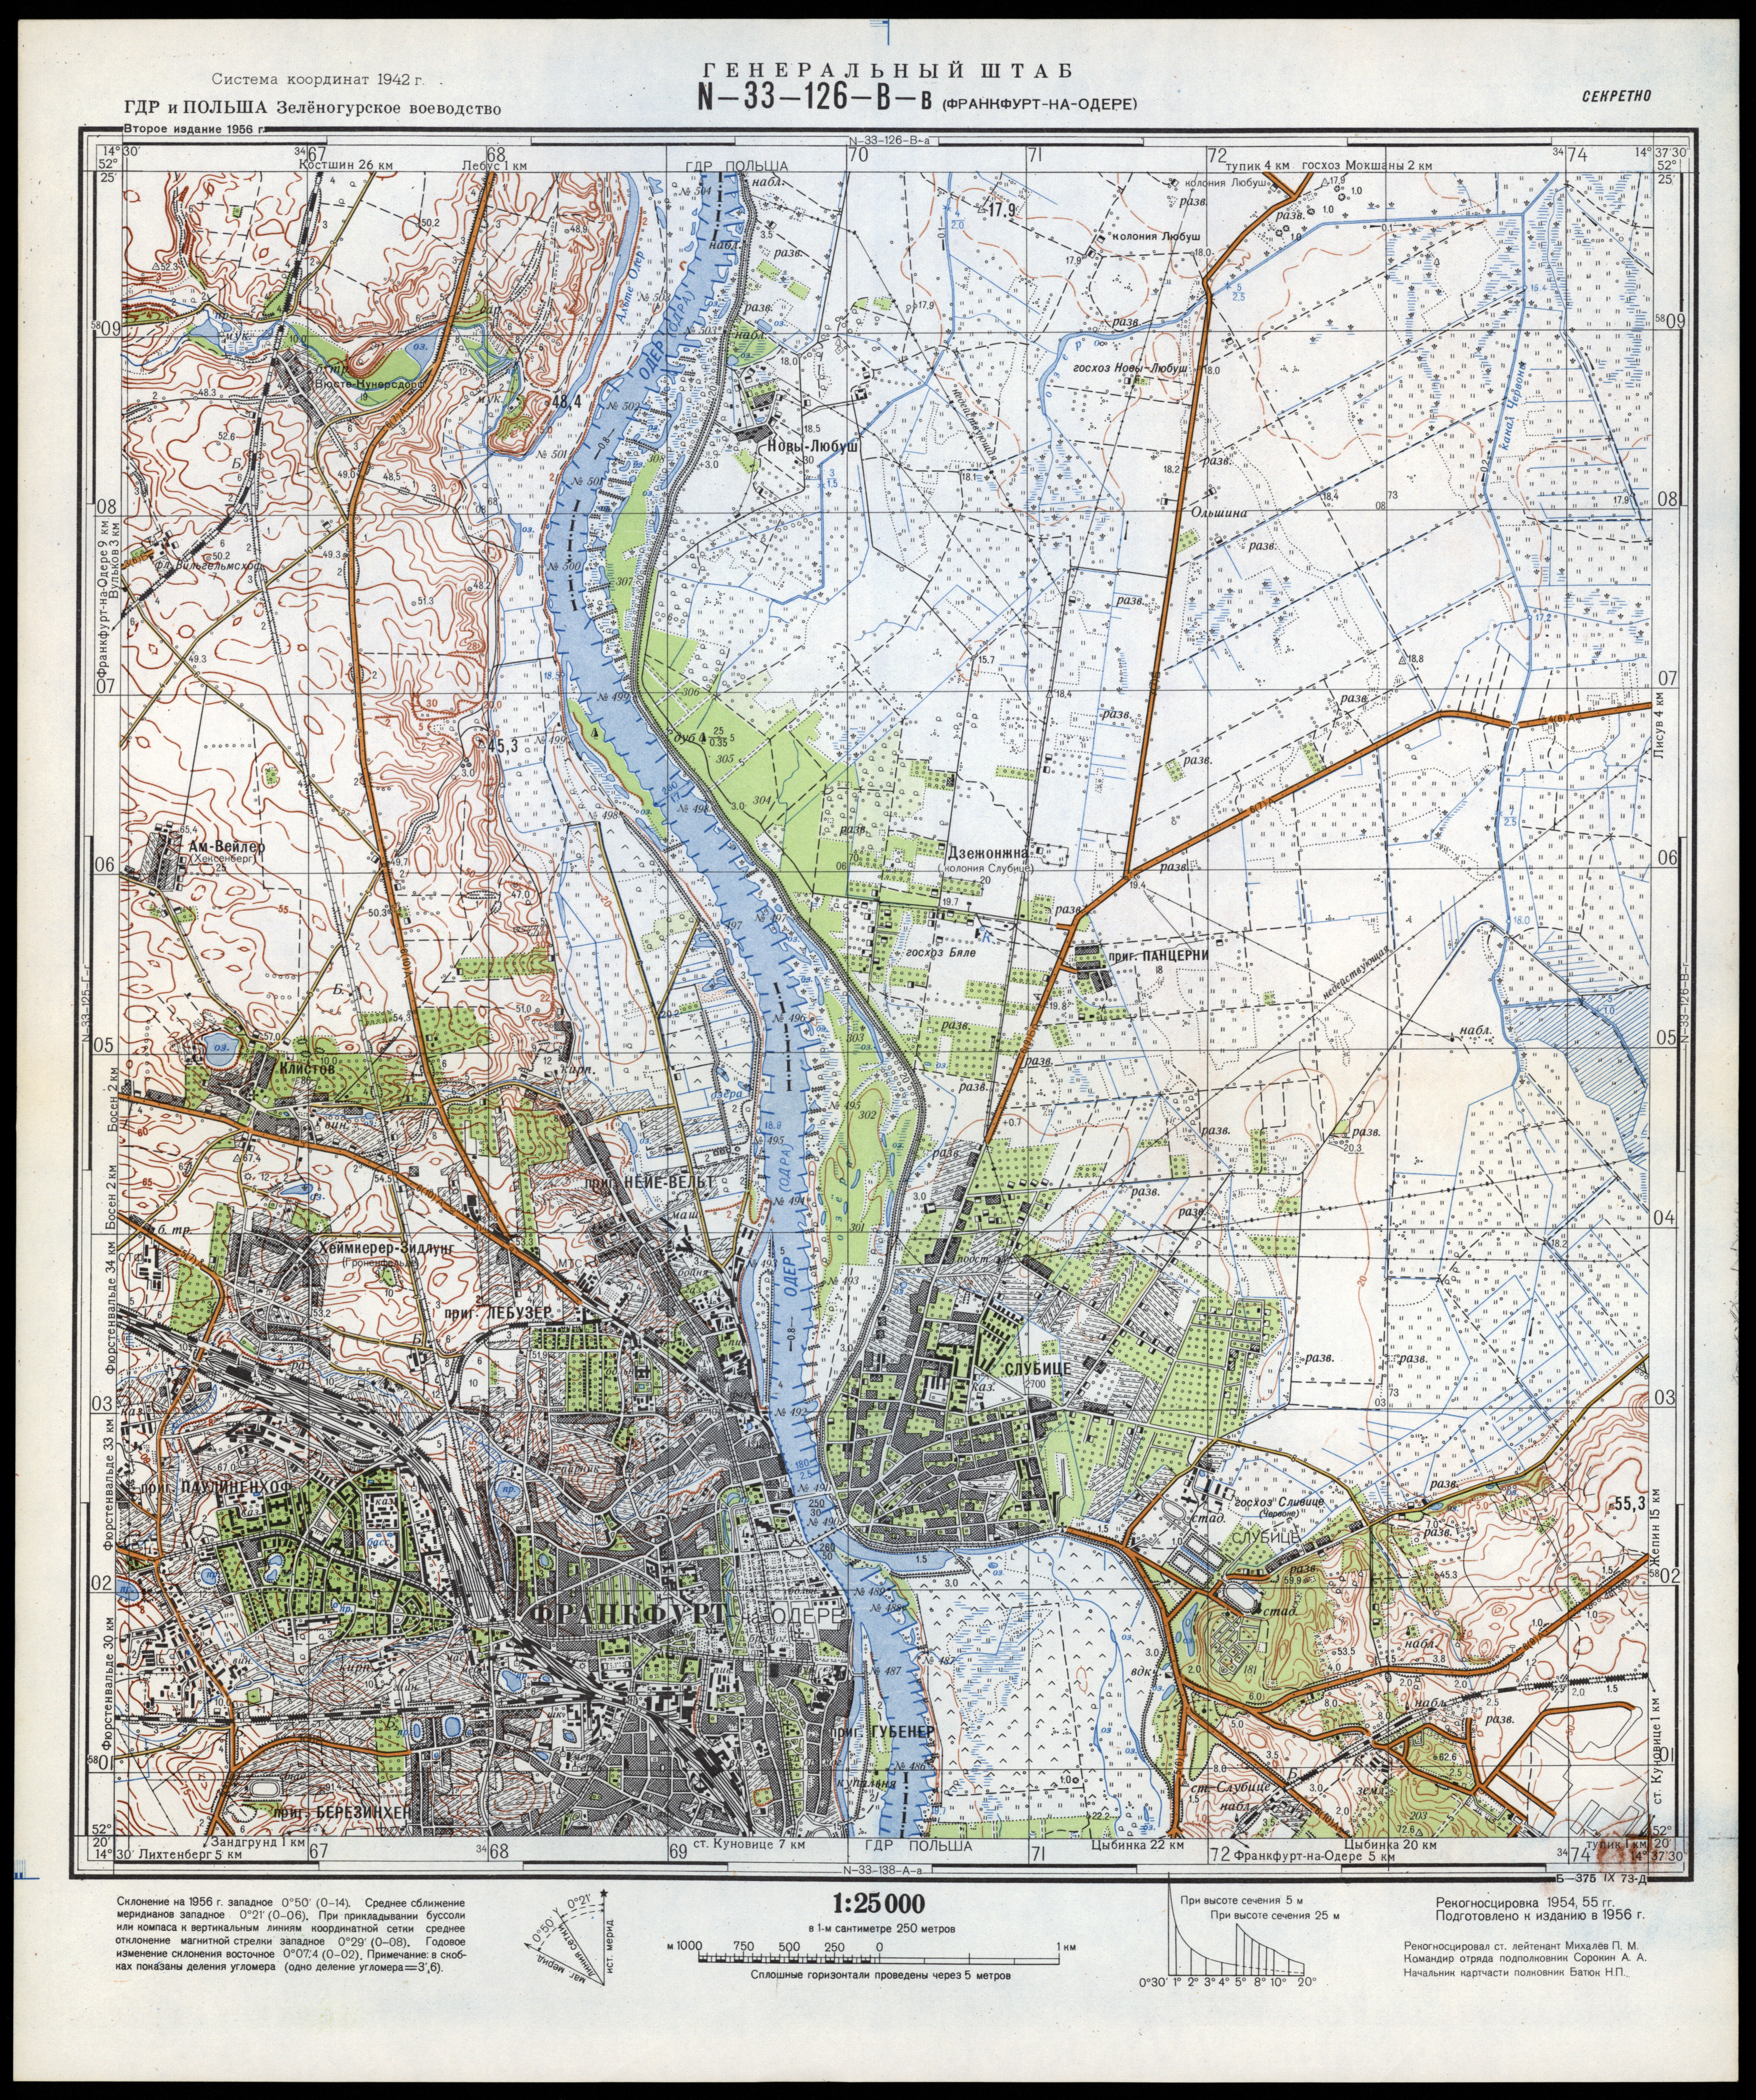 Mapy topograficzne radzieckie 1_25 000 - N-33-126-V-v_FRANKFURT-NA-ODERE_1973.jpg